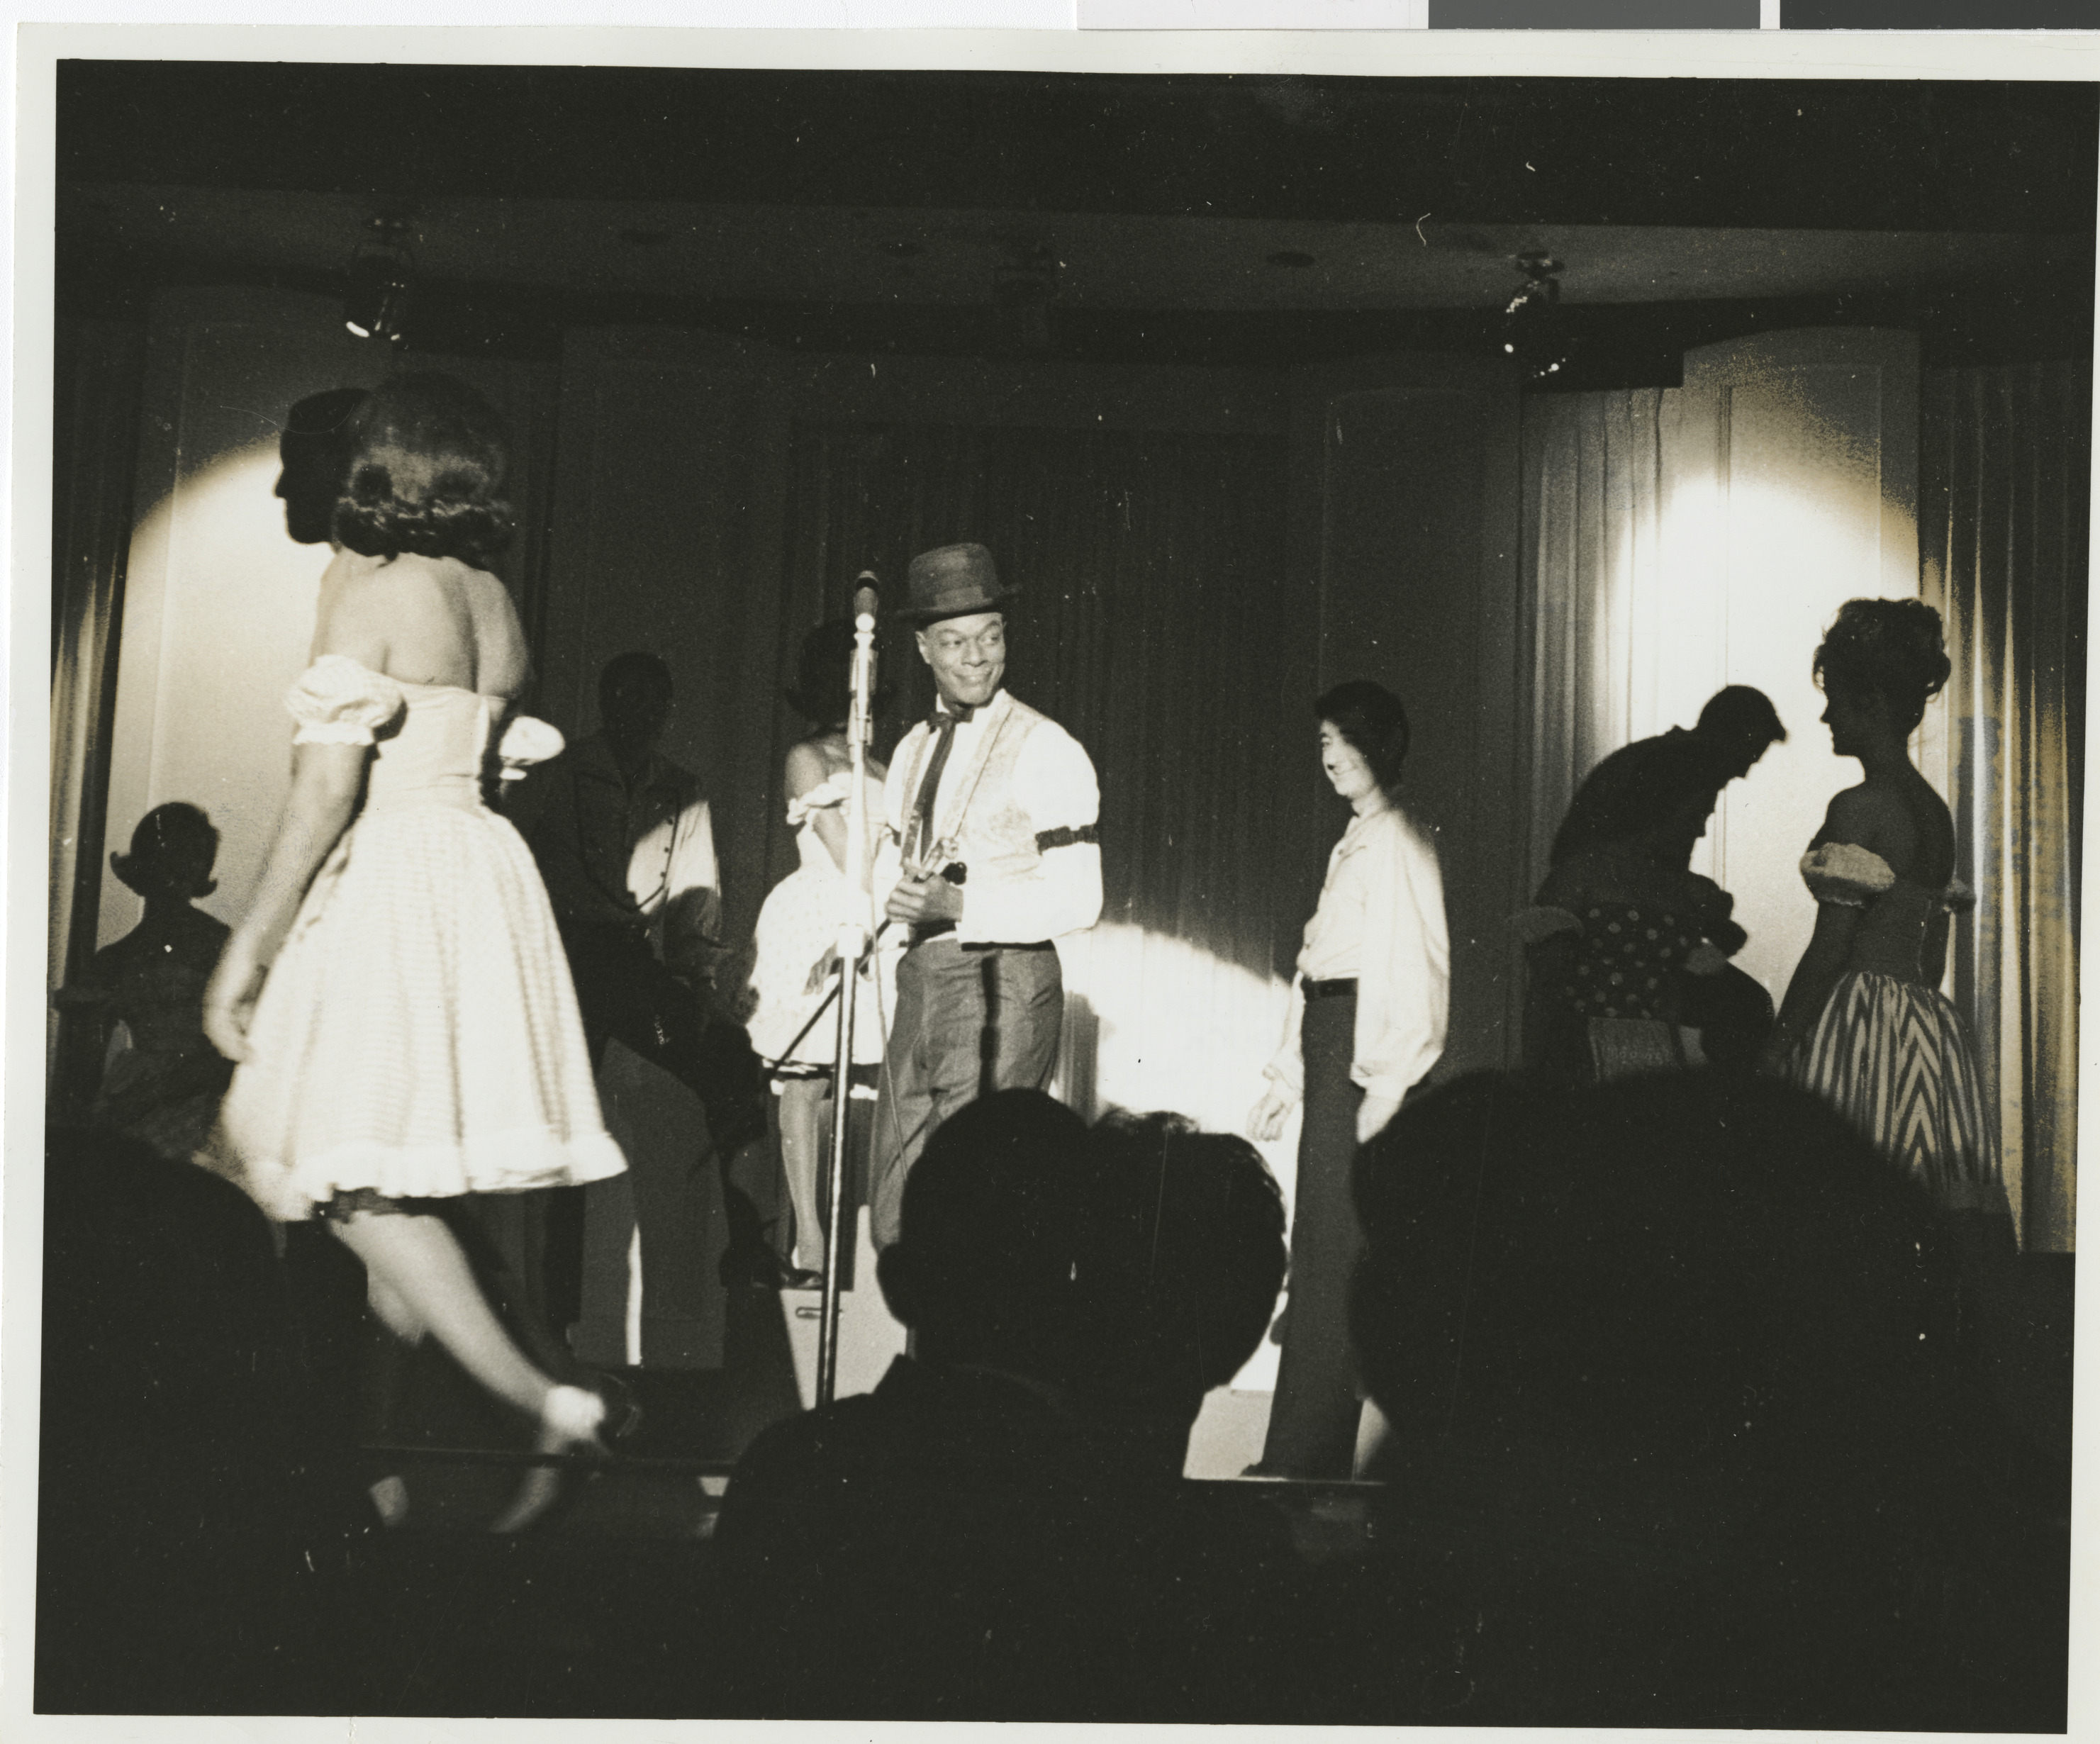 Nat King Cole on stage, Image 06